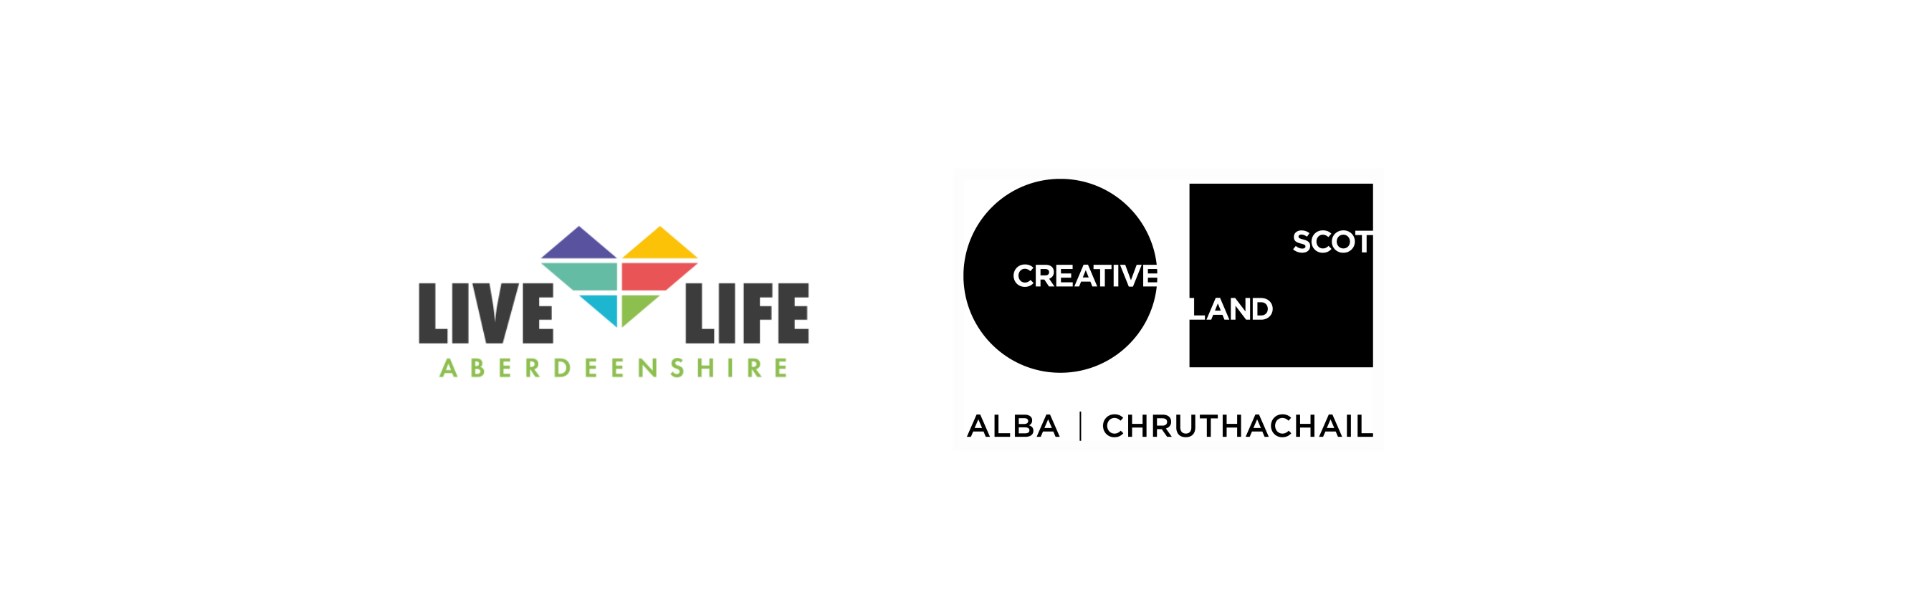 Live Life Aberdeenshire logo and Creative Scotland logo